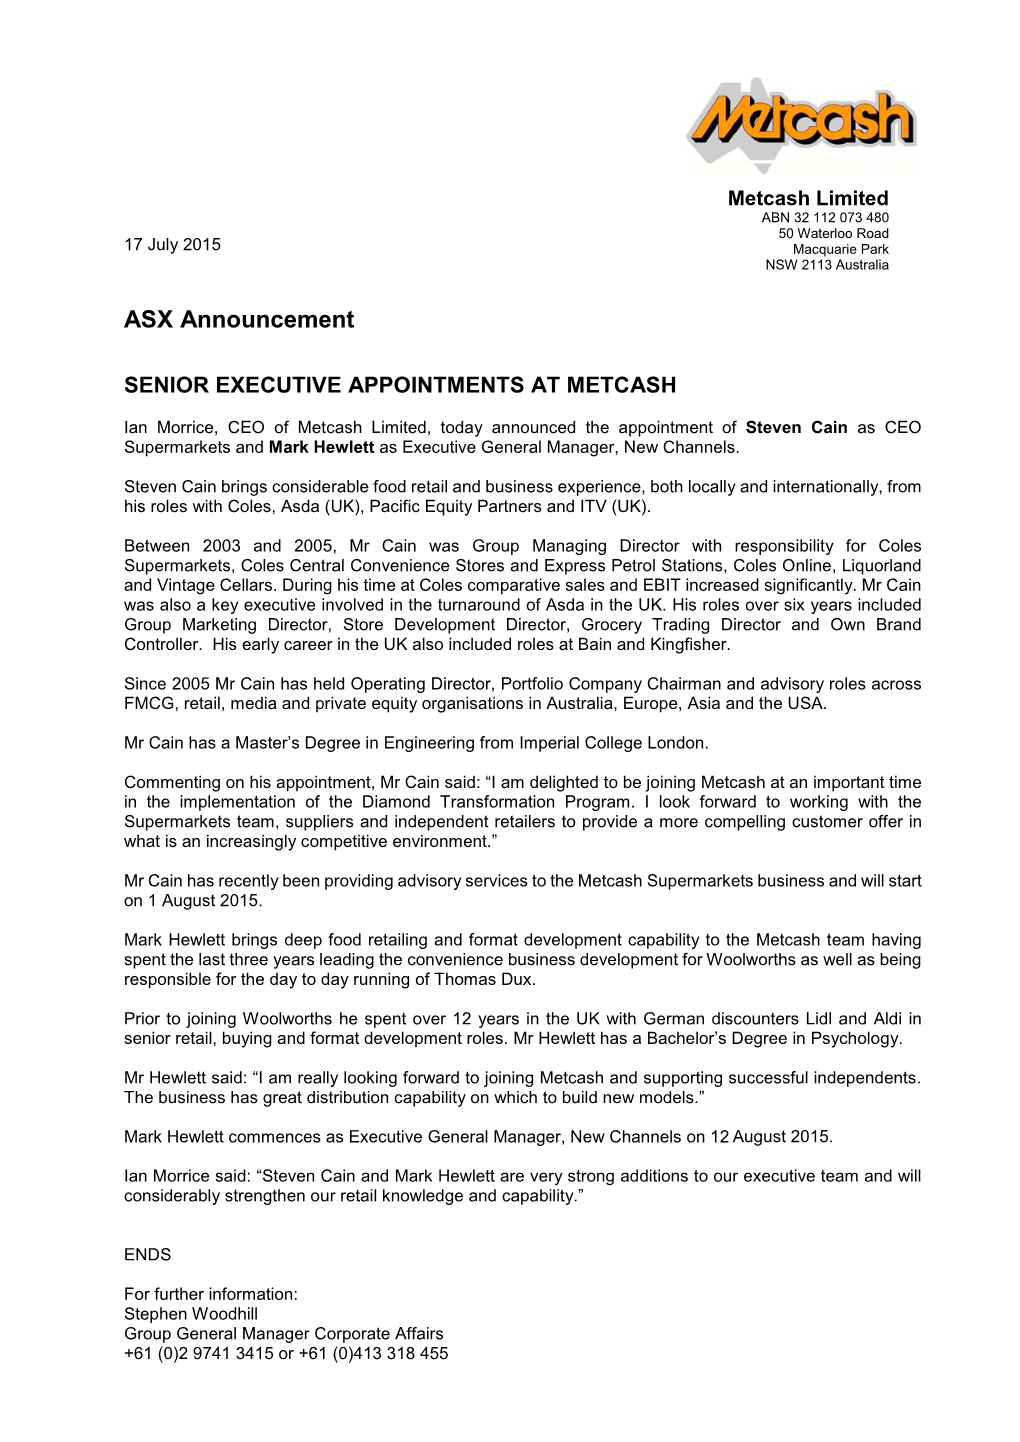 17 July 2015 Senior Executive Appointments at Metcash